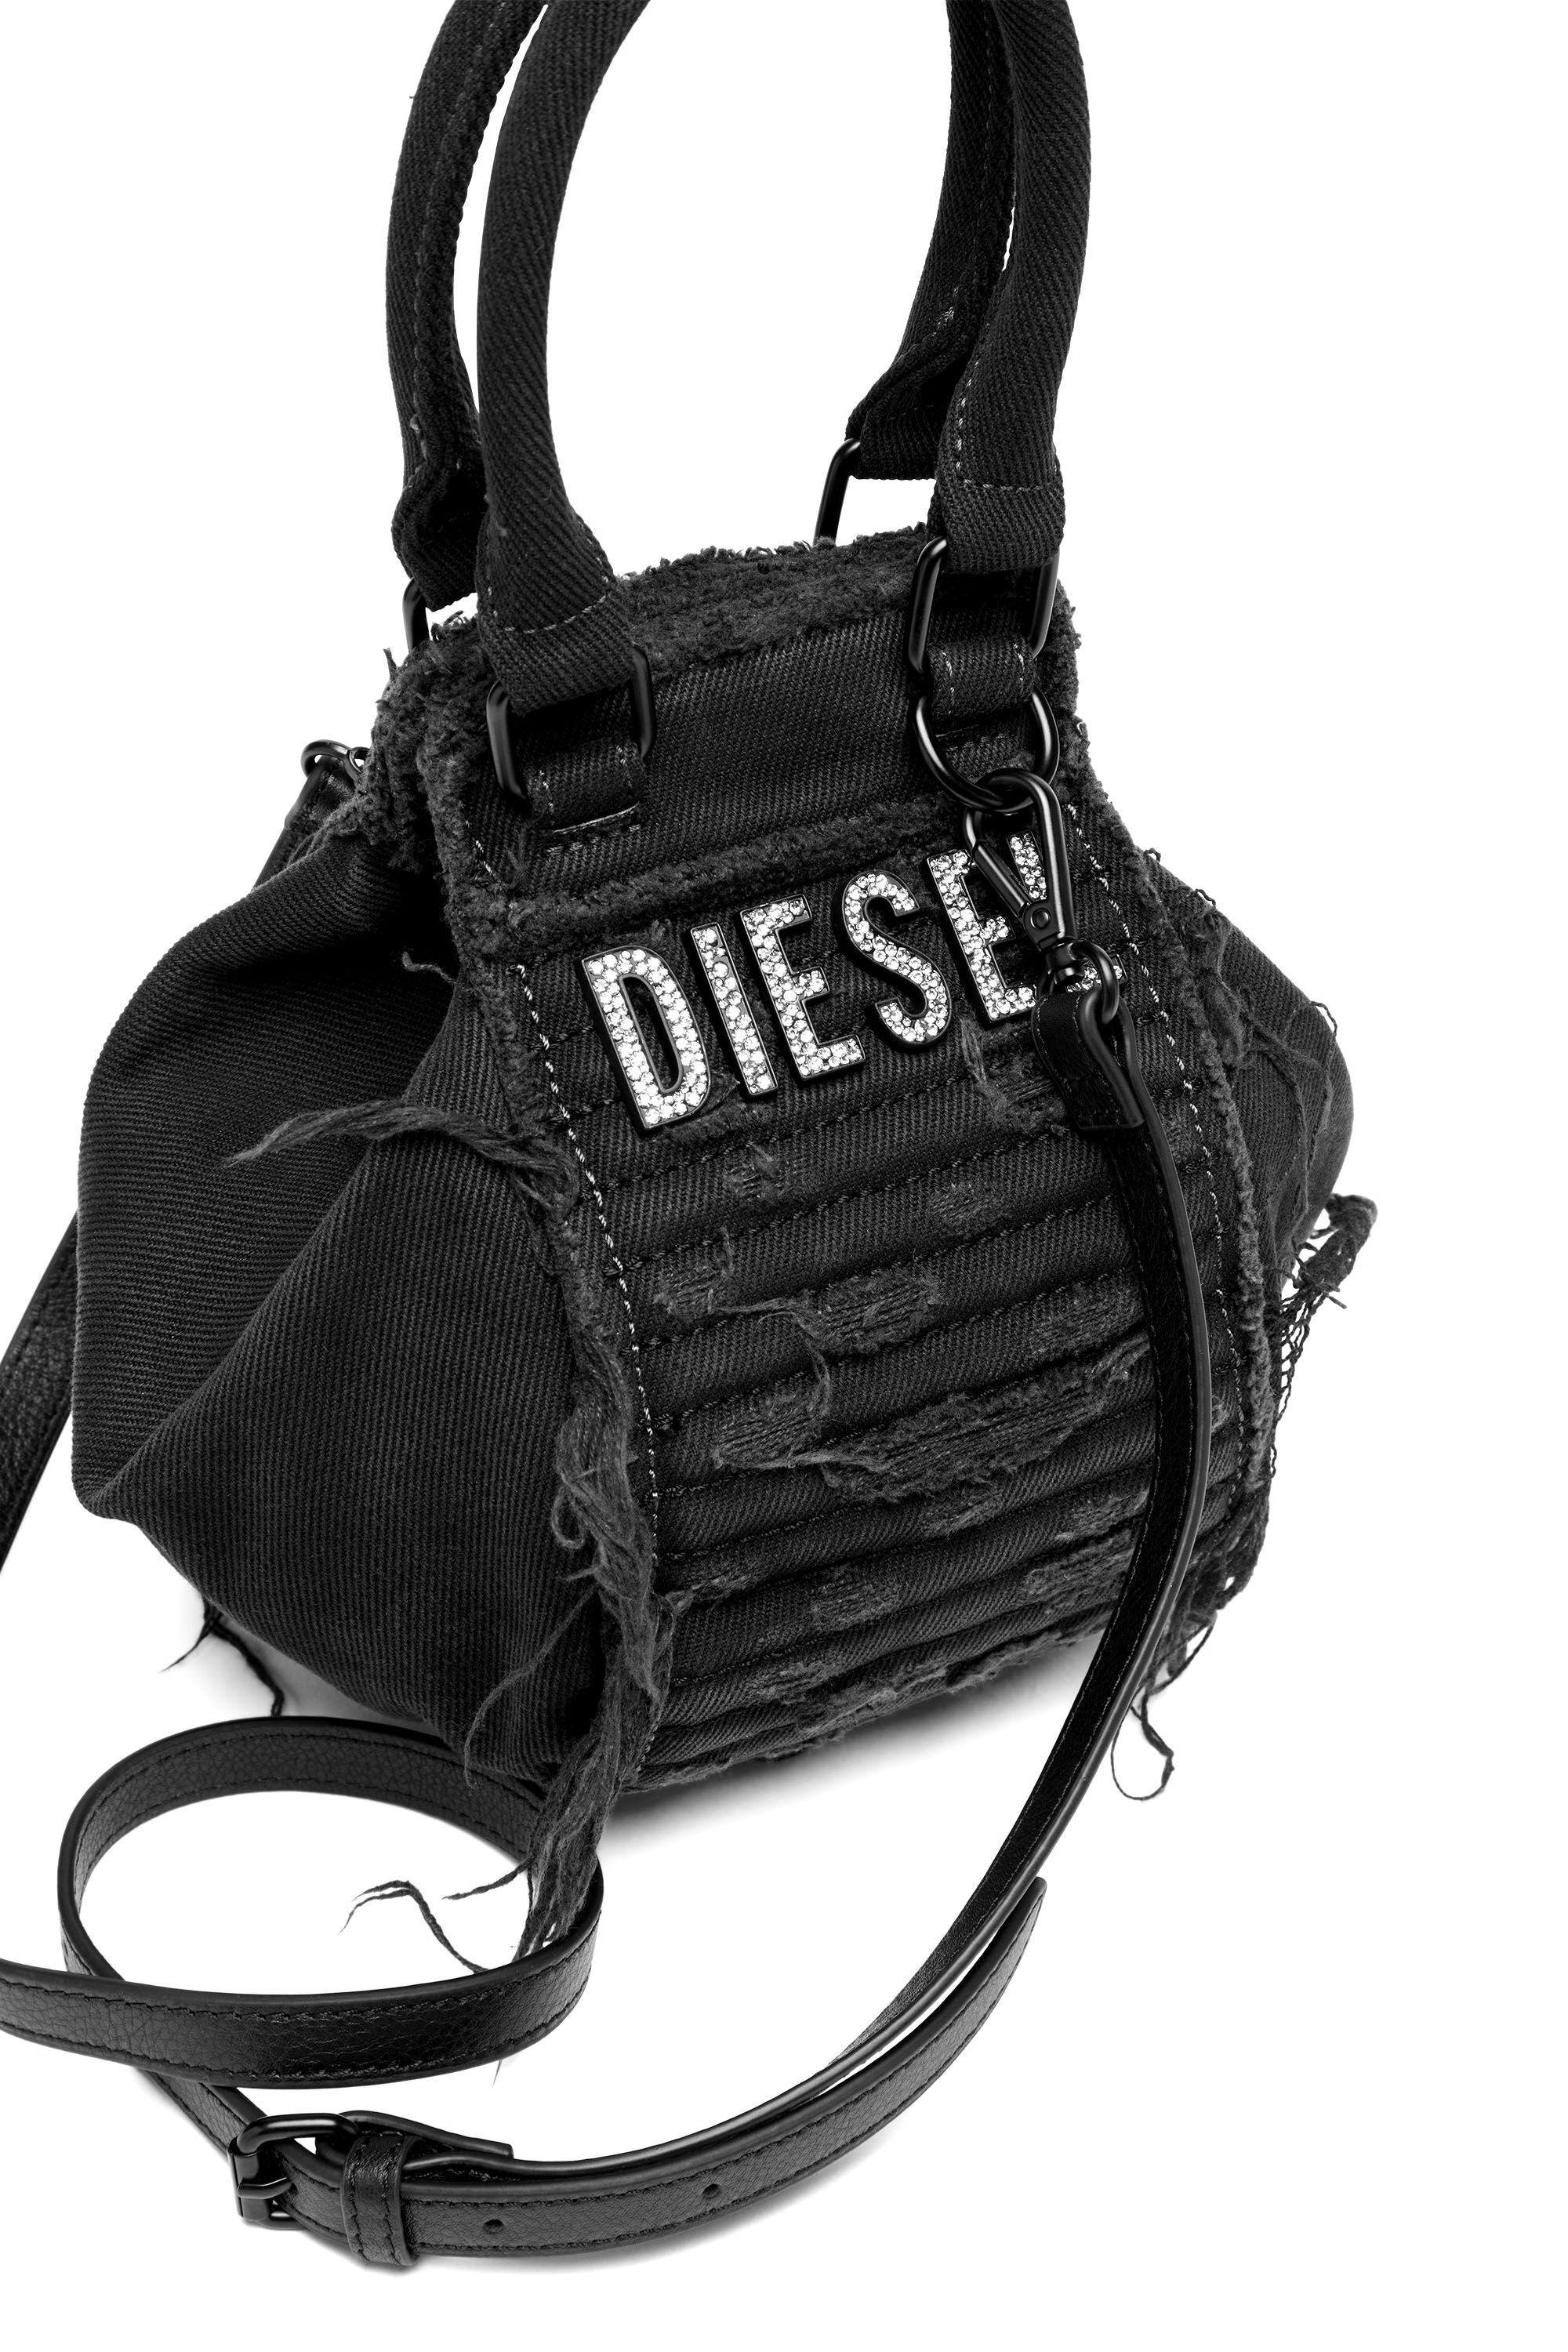 Diesel - D-VINA-C XS, Black - Image 4